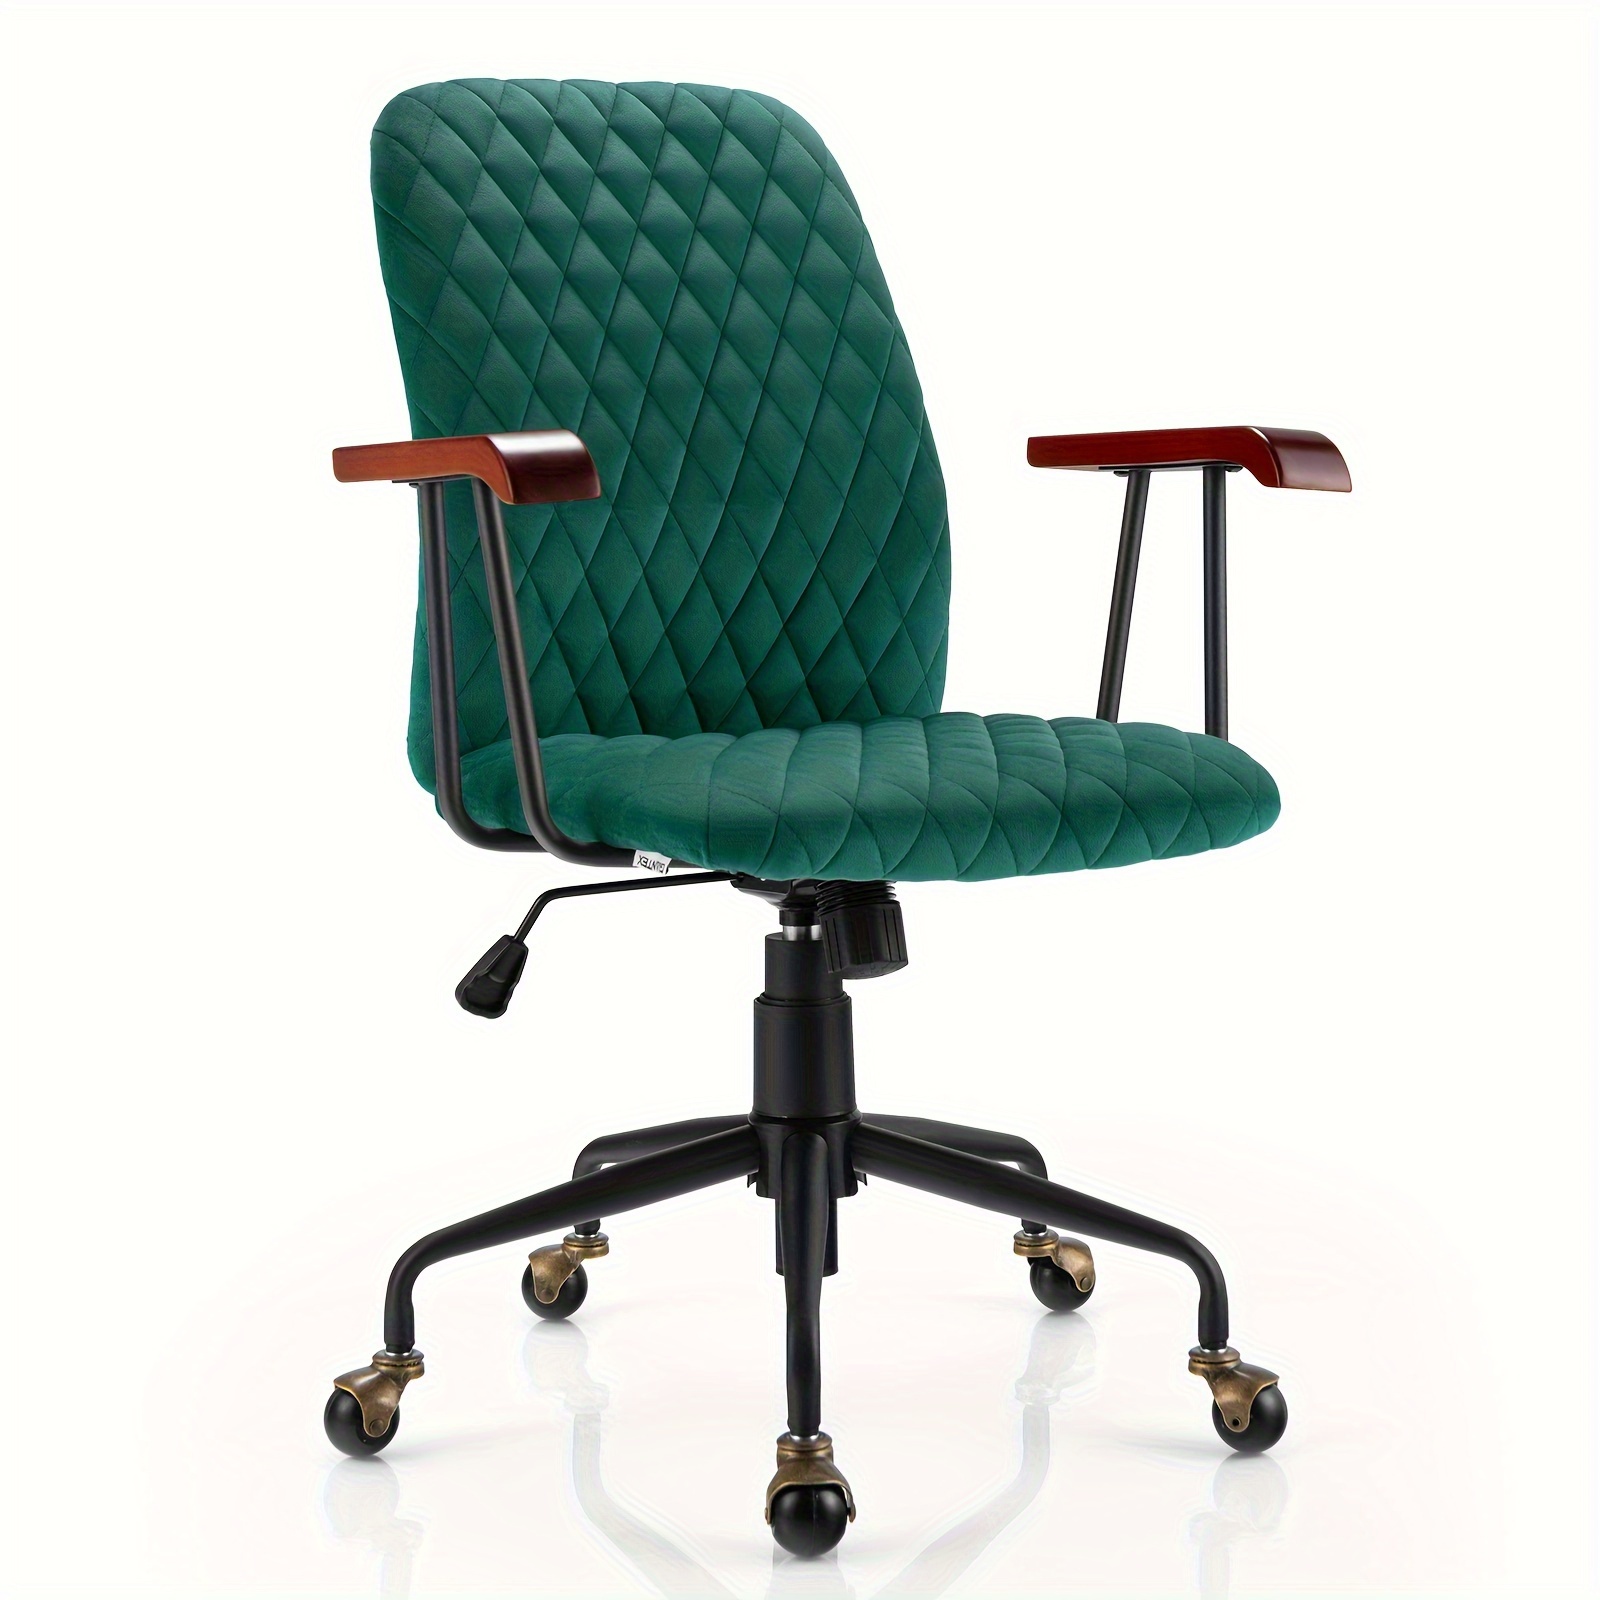 

Costway Velvet Home Office Chair Swivel Adjustable Task Chair W/ Wooden Armrest Green